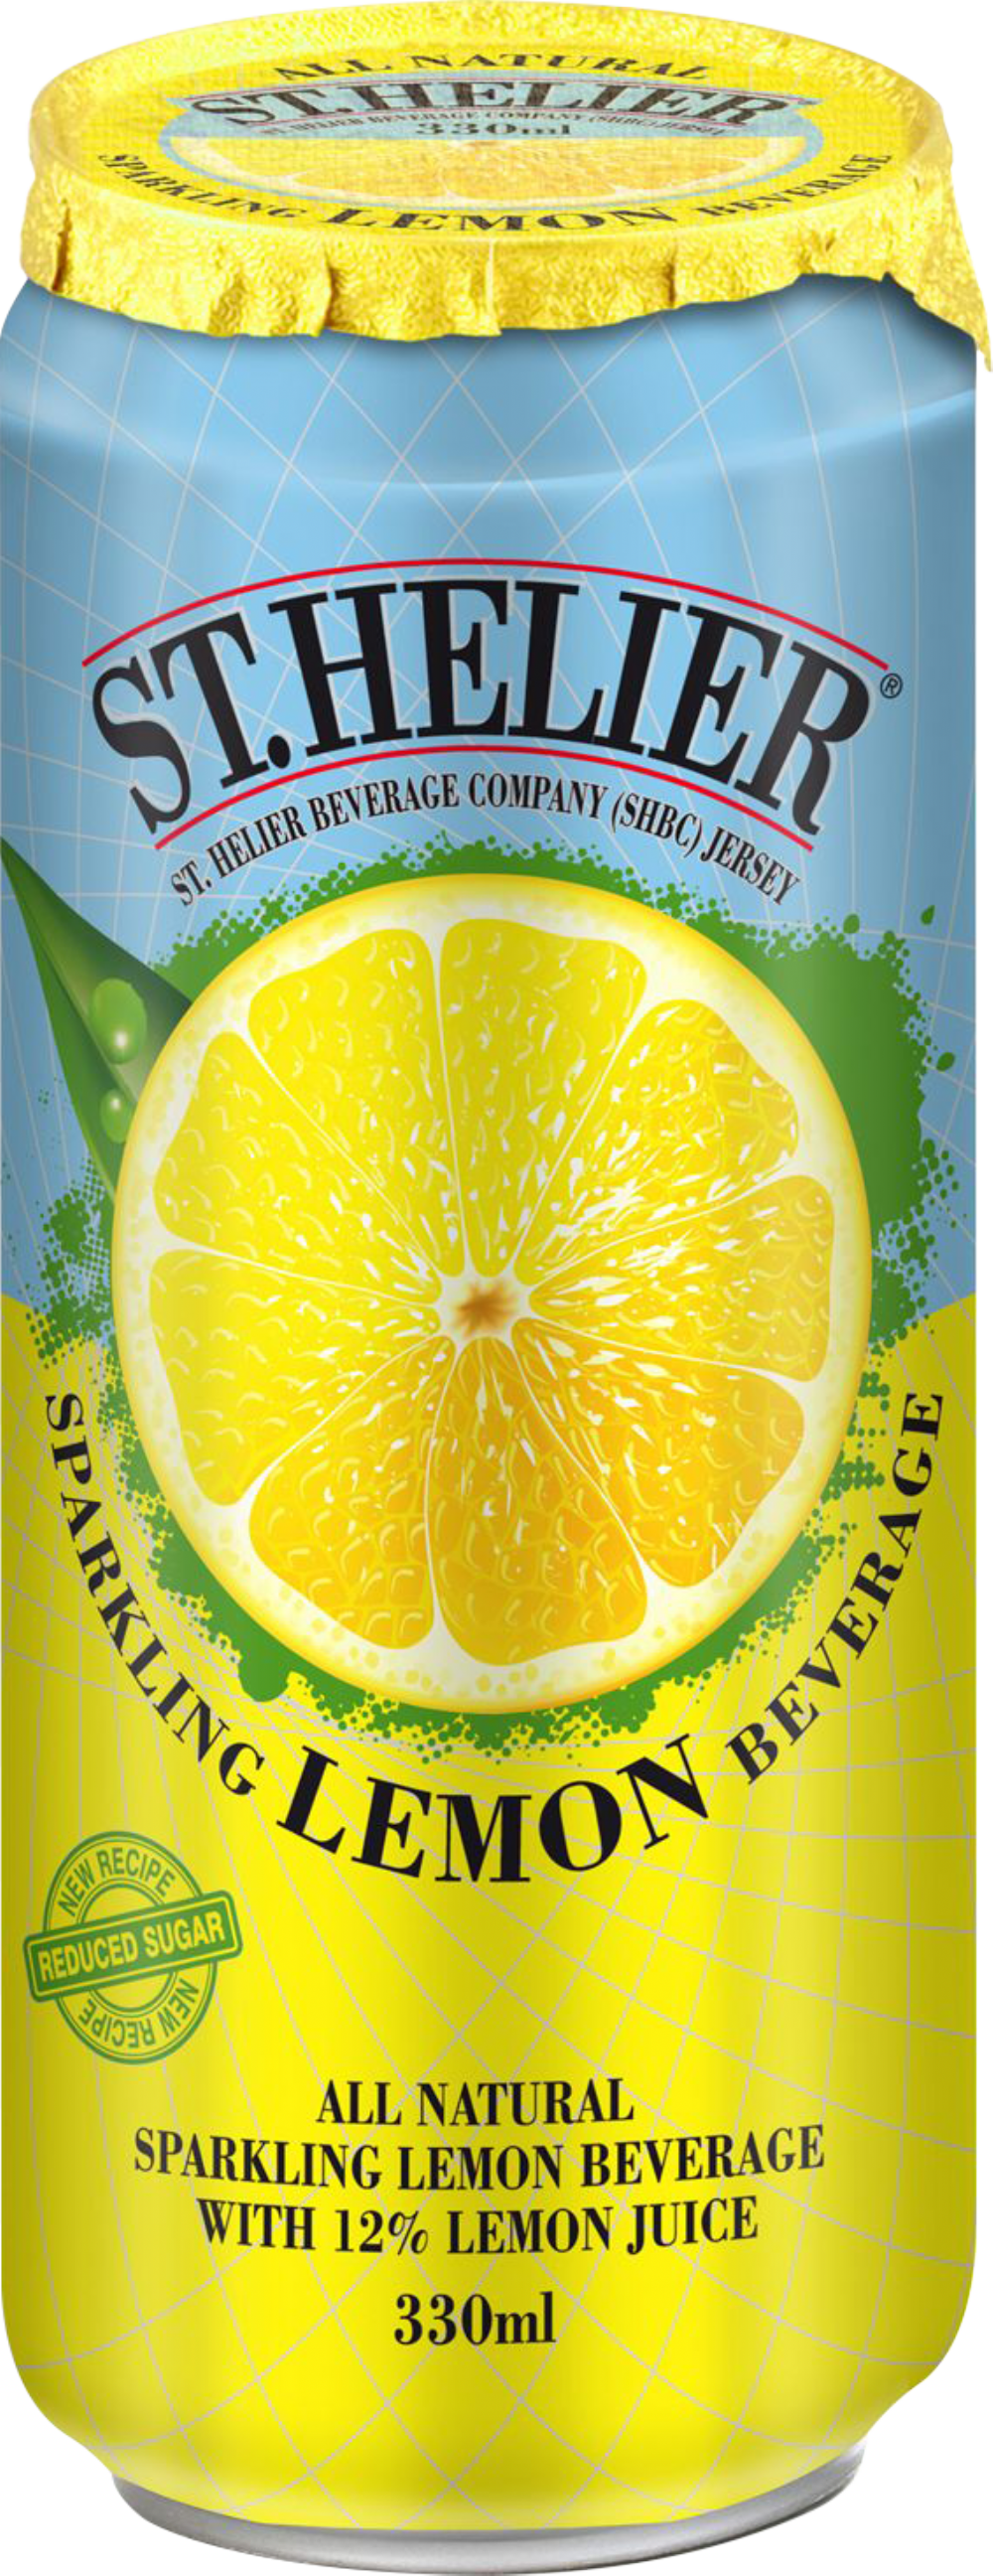 ST HELIER Sparkling Lemon Beverage 330ml